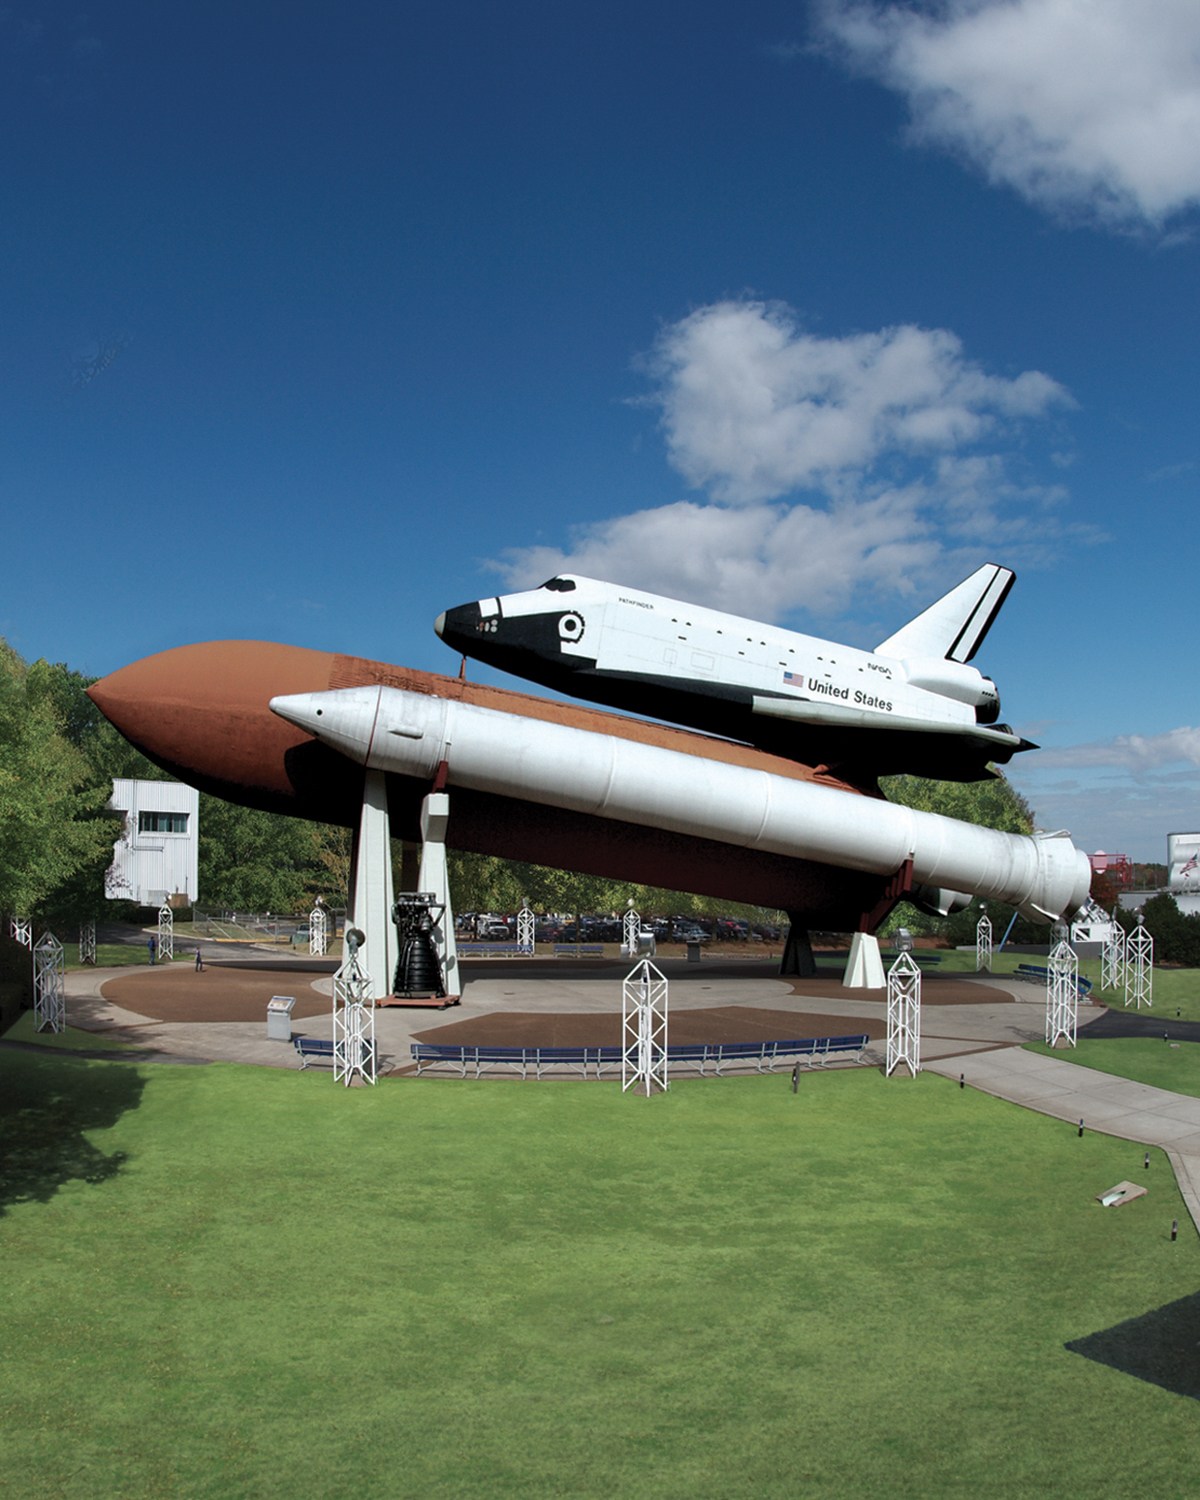 US Space and Rocket Center in Huntsville, Alabama USA ©Alabama Tourism Department